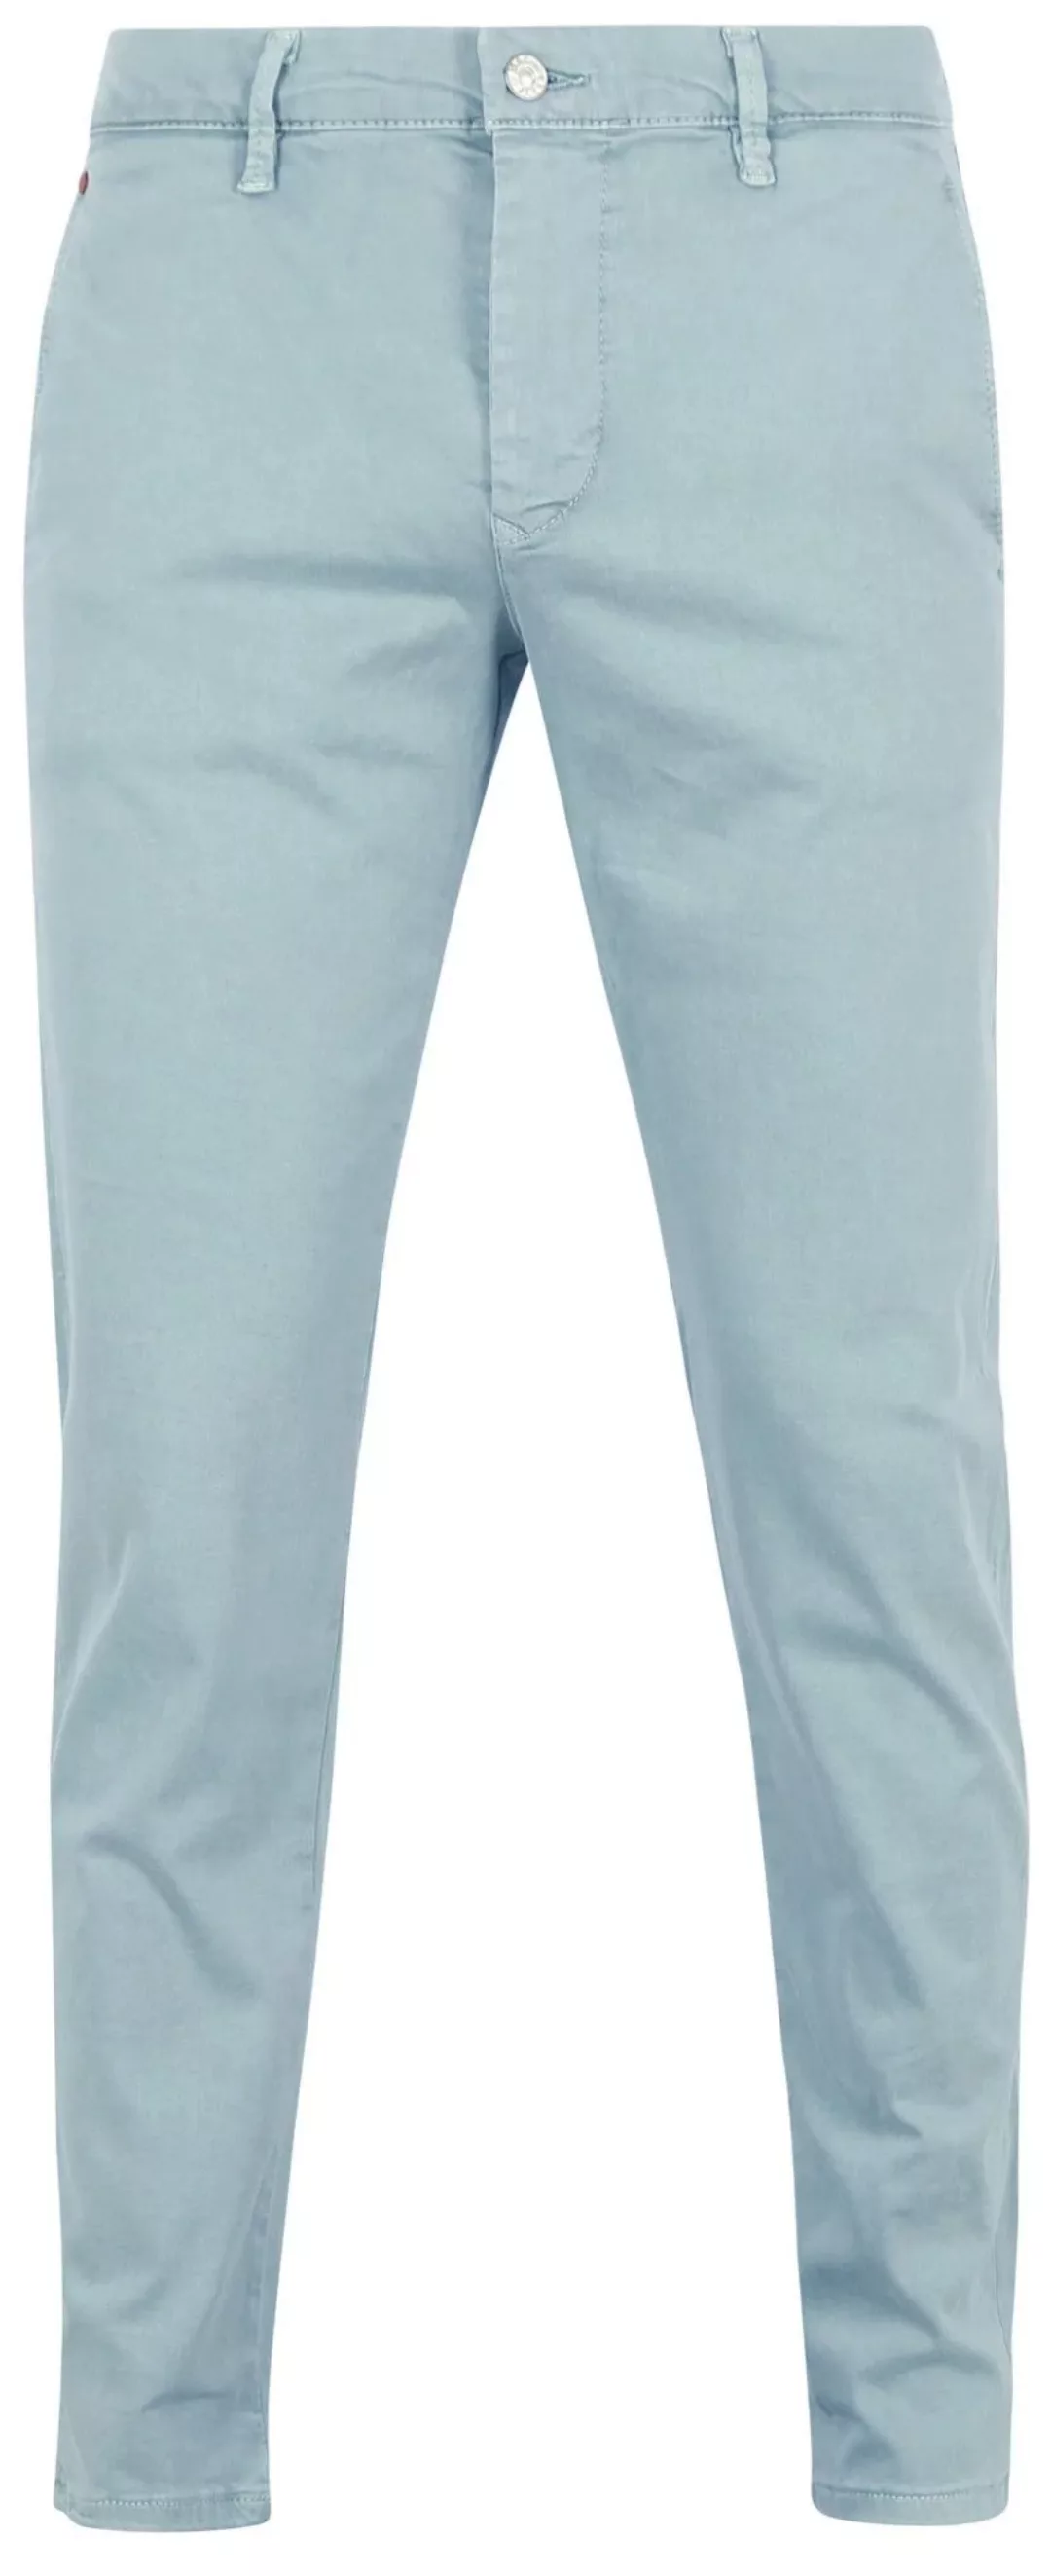 Mac Jeans Driver Pants Hellblau - Größe W 36 - L 34 günstig online kaufen